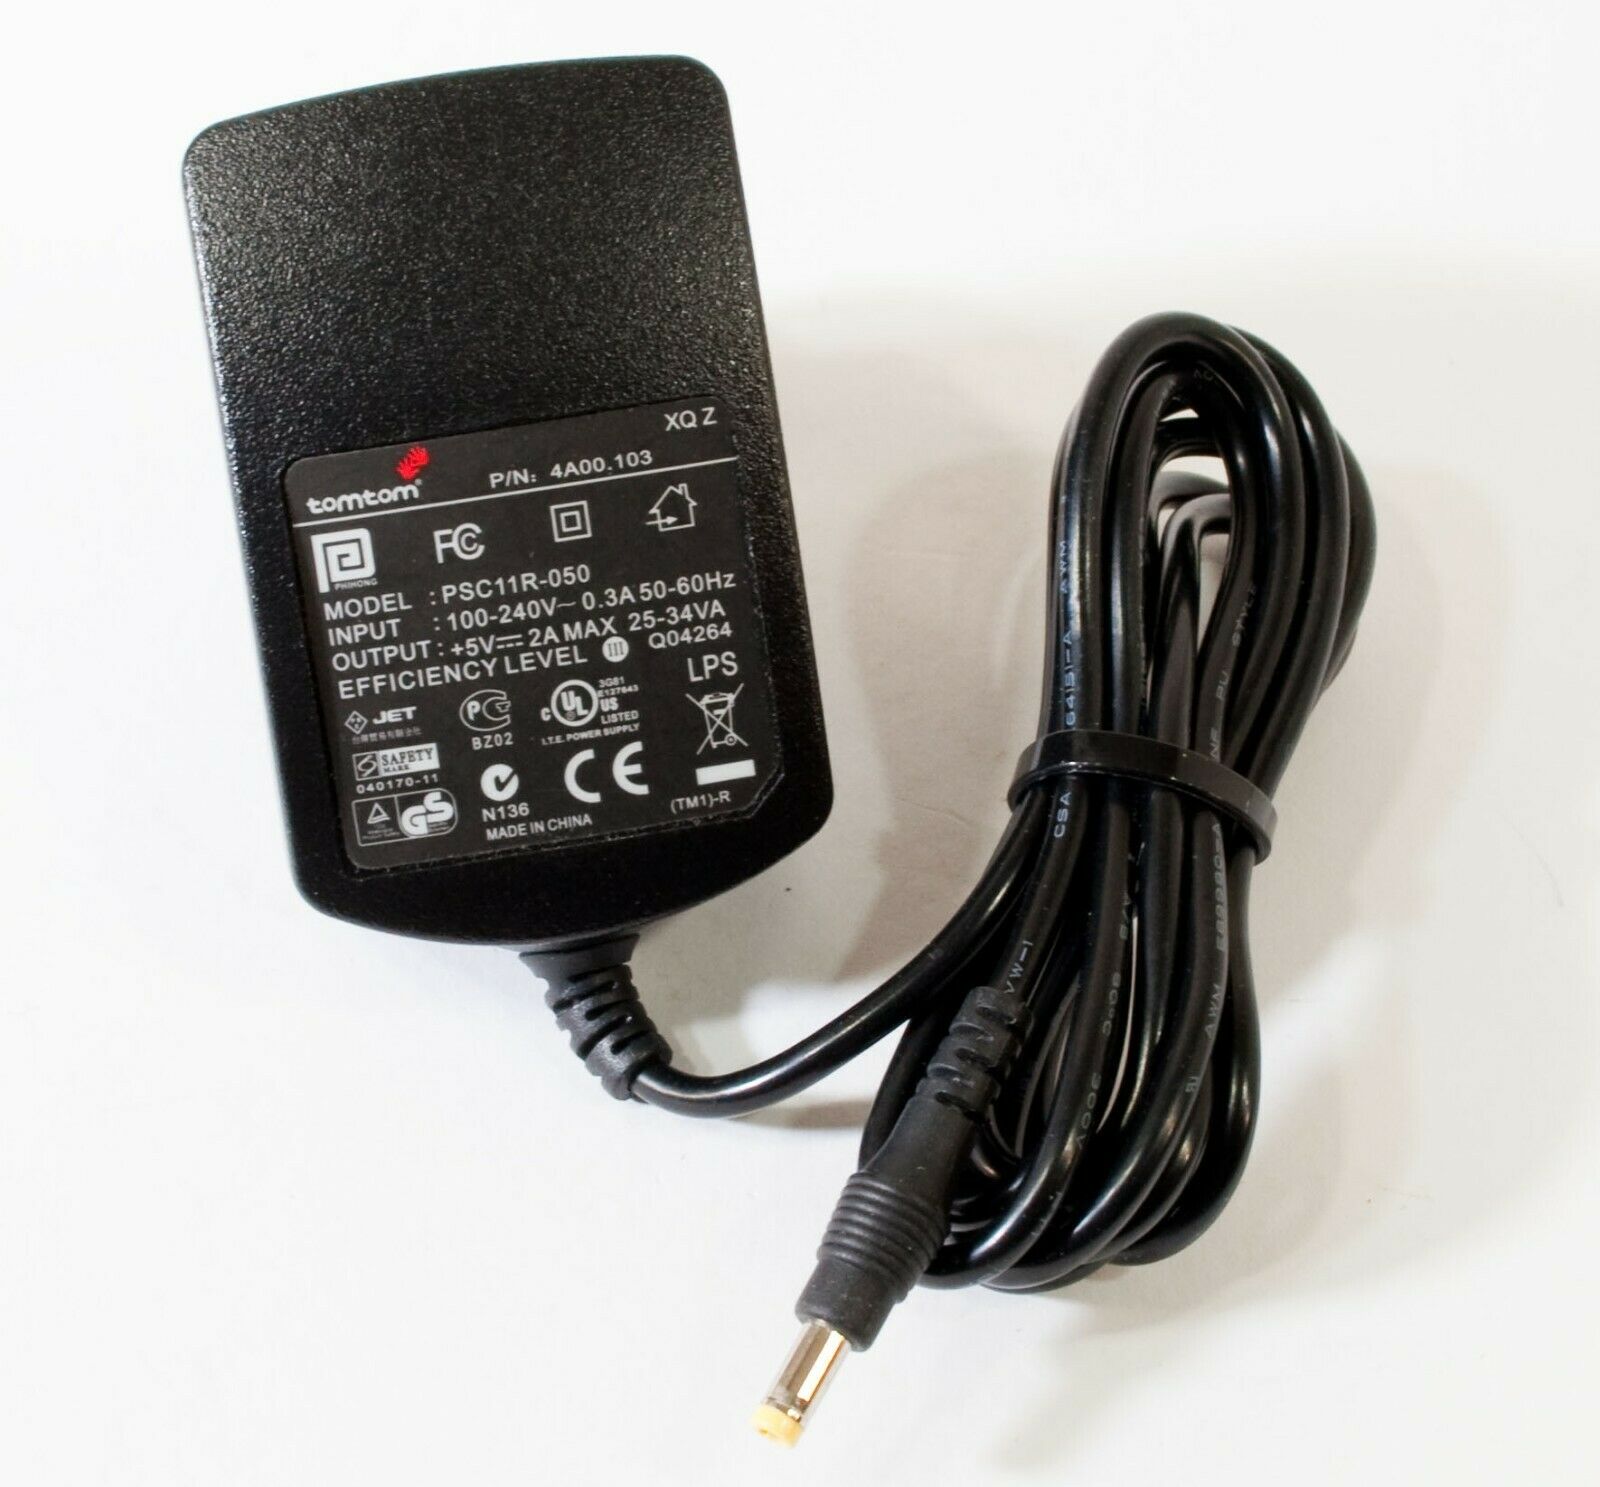 TomTom PSC11R-050 AC Adapter 5V 2A Original Charger Power Supply Europlug Output